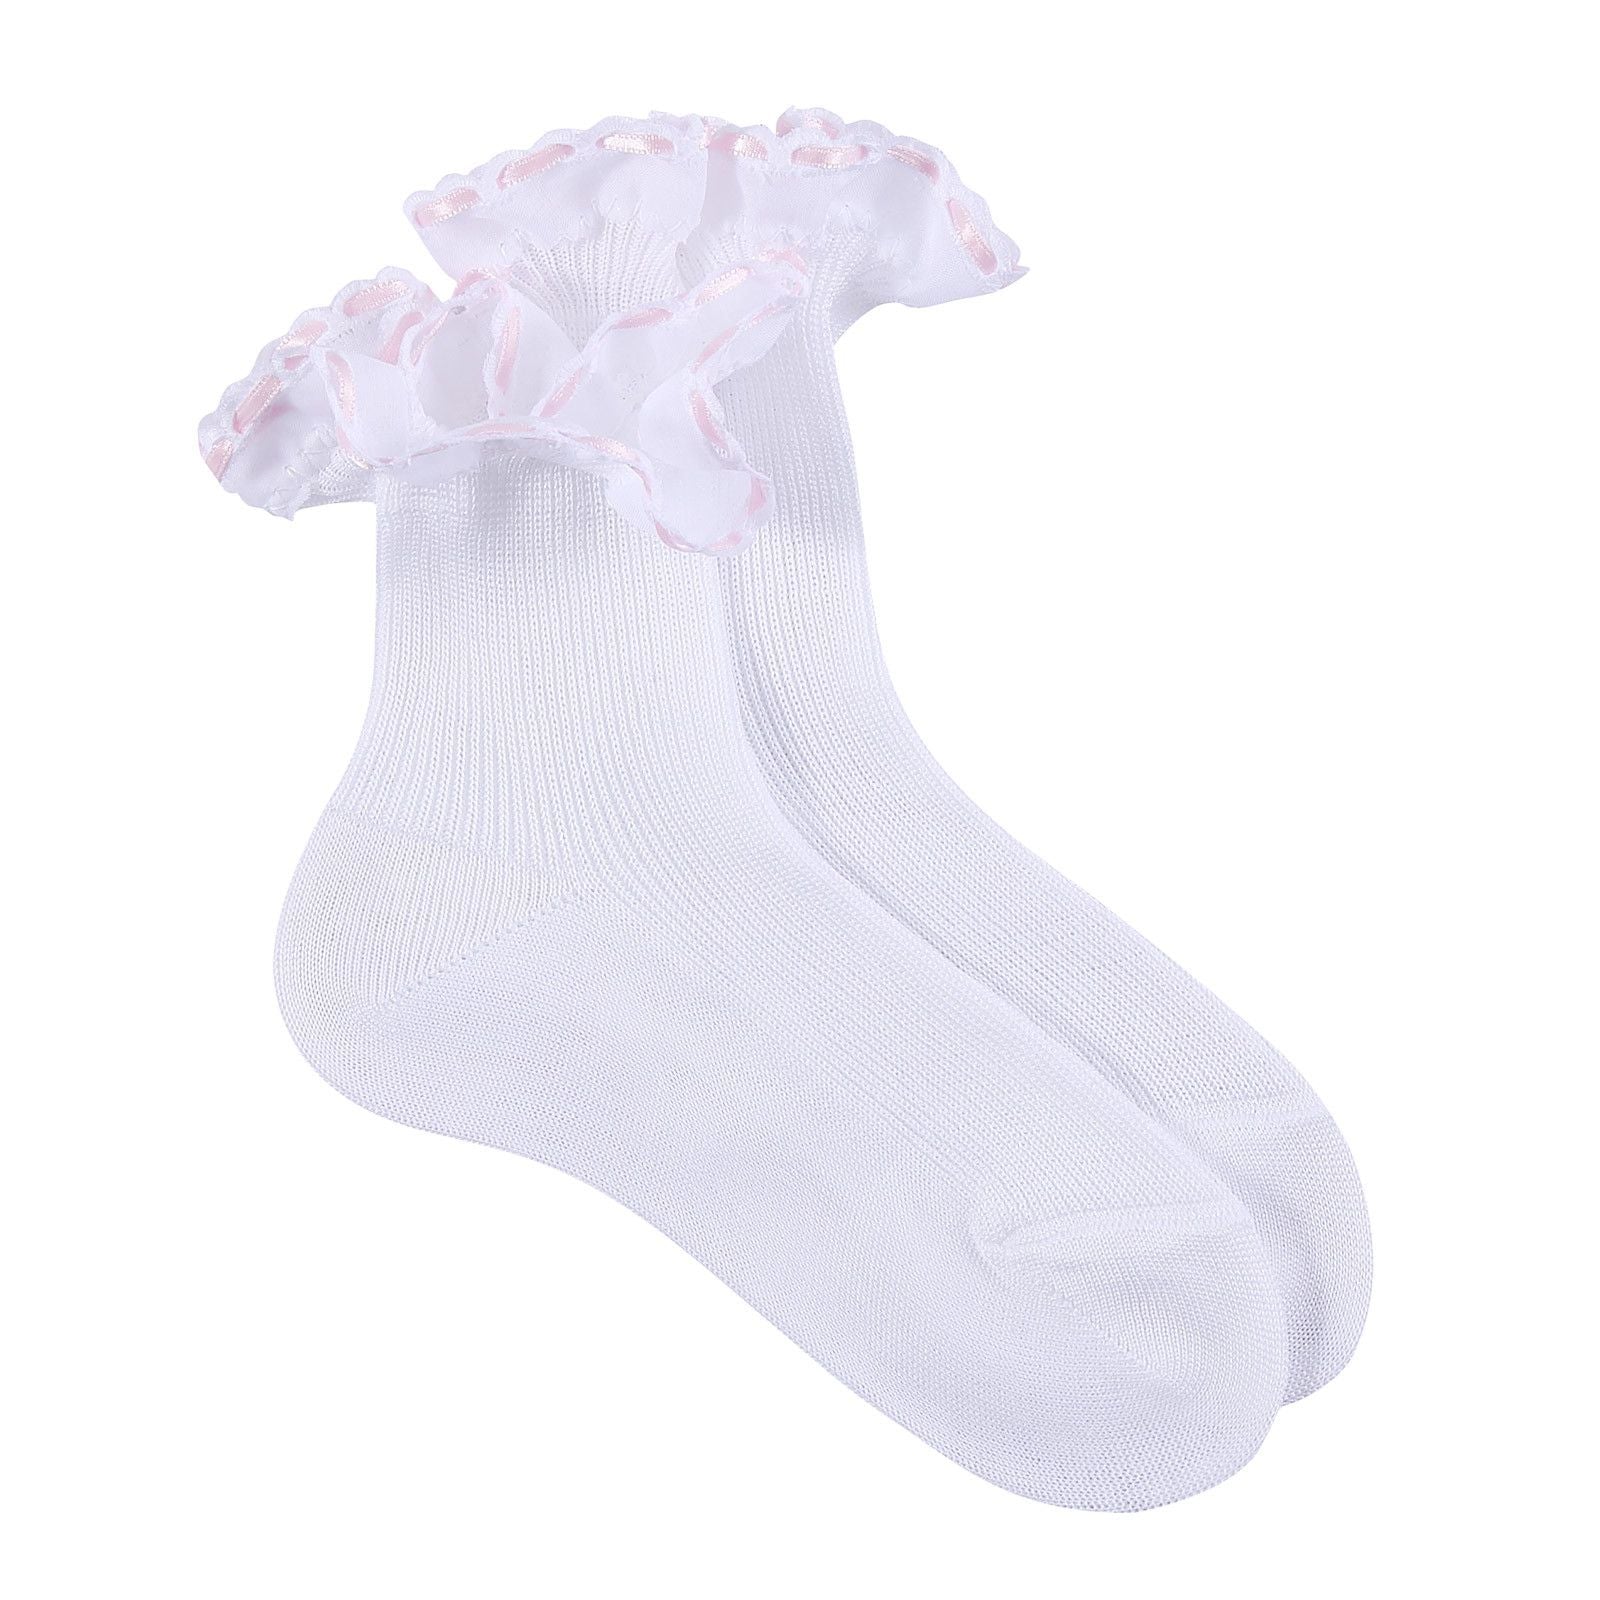 Girls White Cotton Short Socks With Light Pink Strap Ankle - CÉMAROSE | Children's Fashion Store